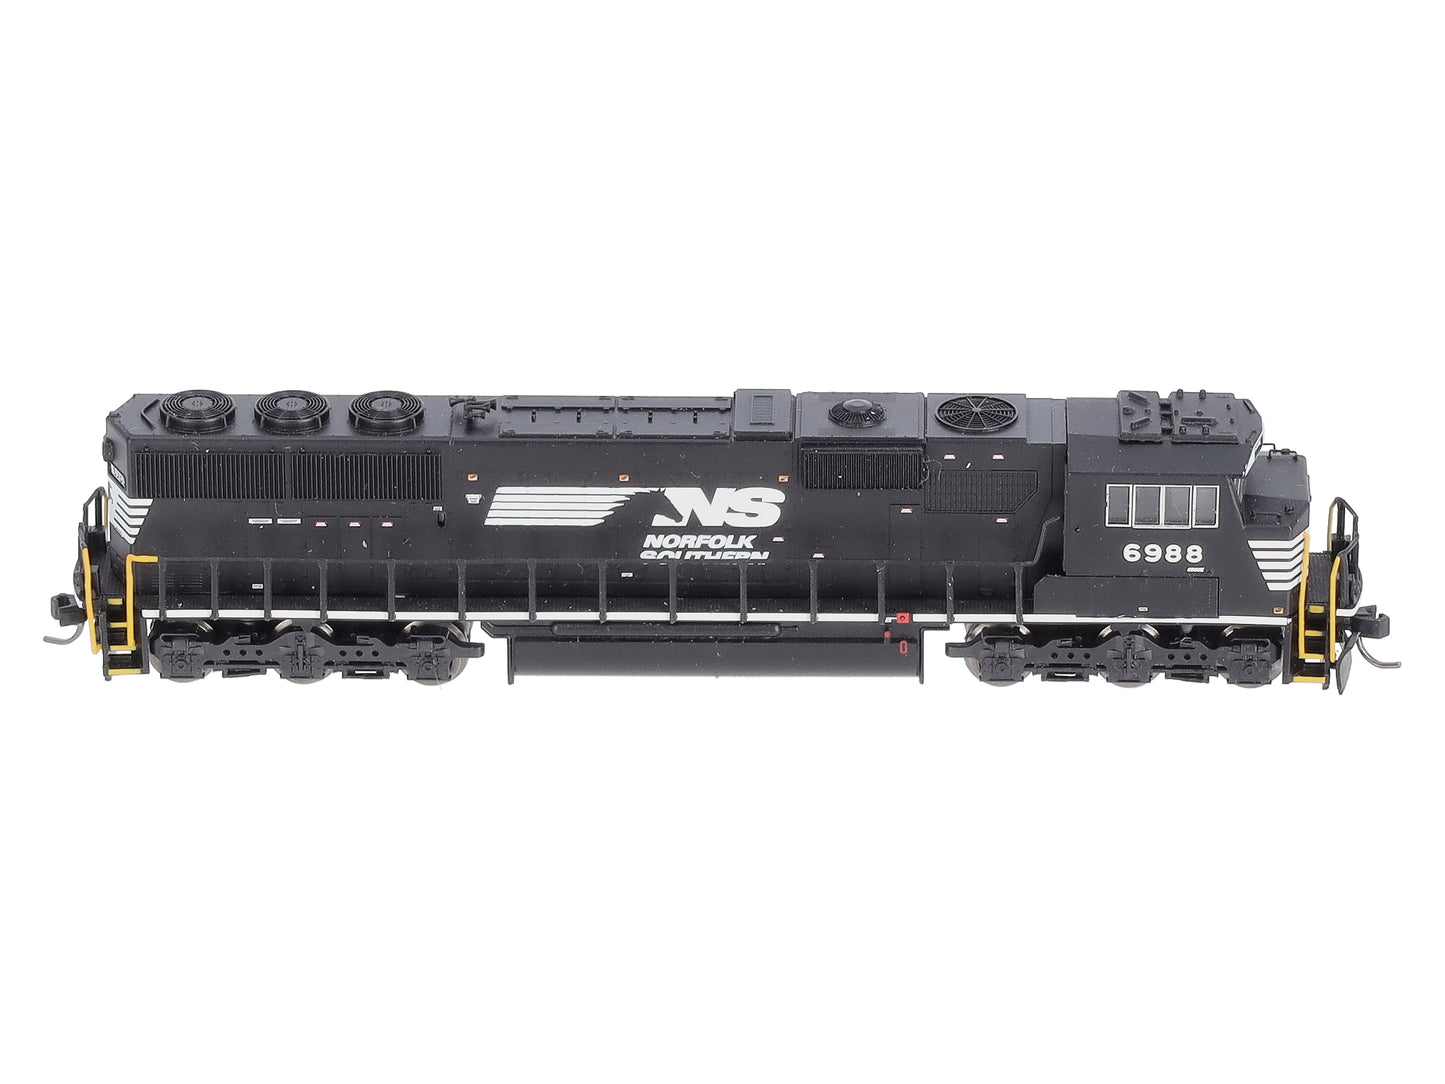 Atlas 40003988 N Norfolk Southern SD-60E Diesel Locomotive DCC & Sound #6988